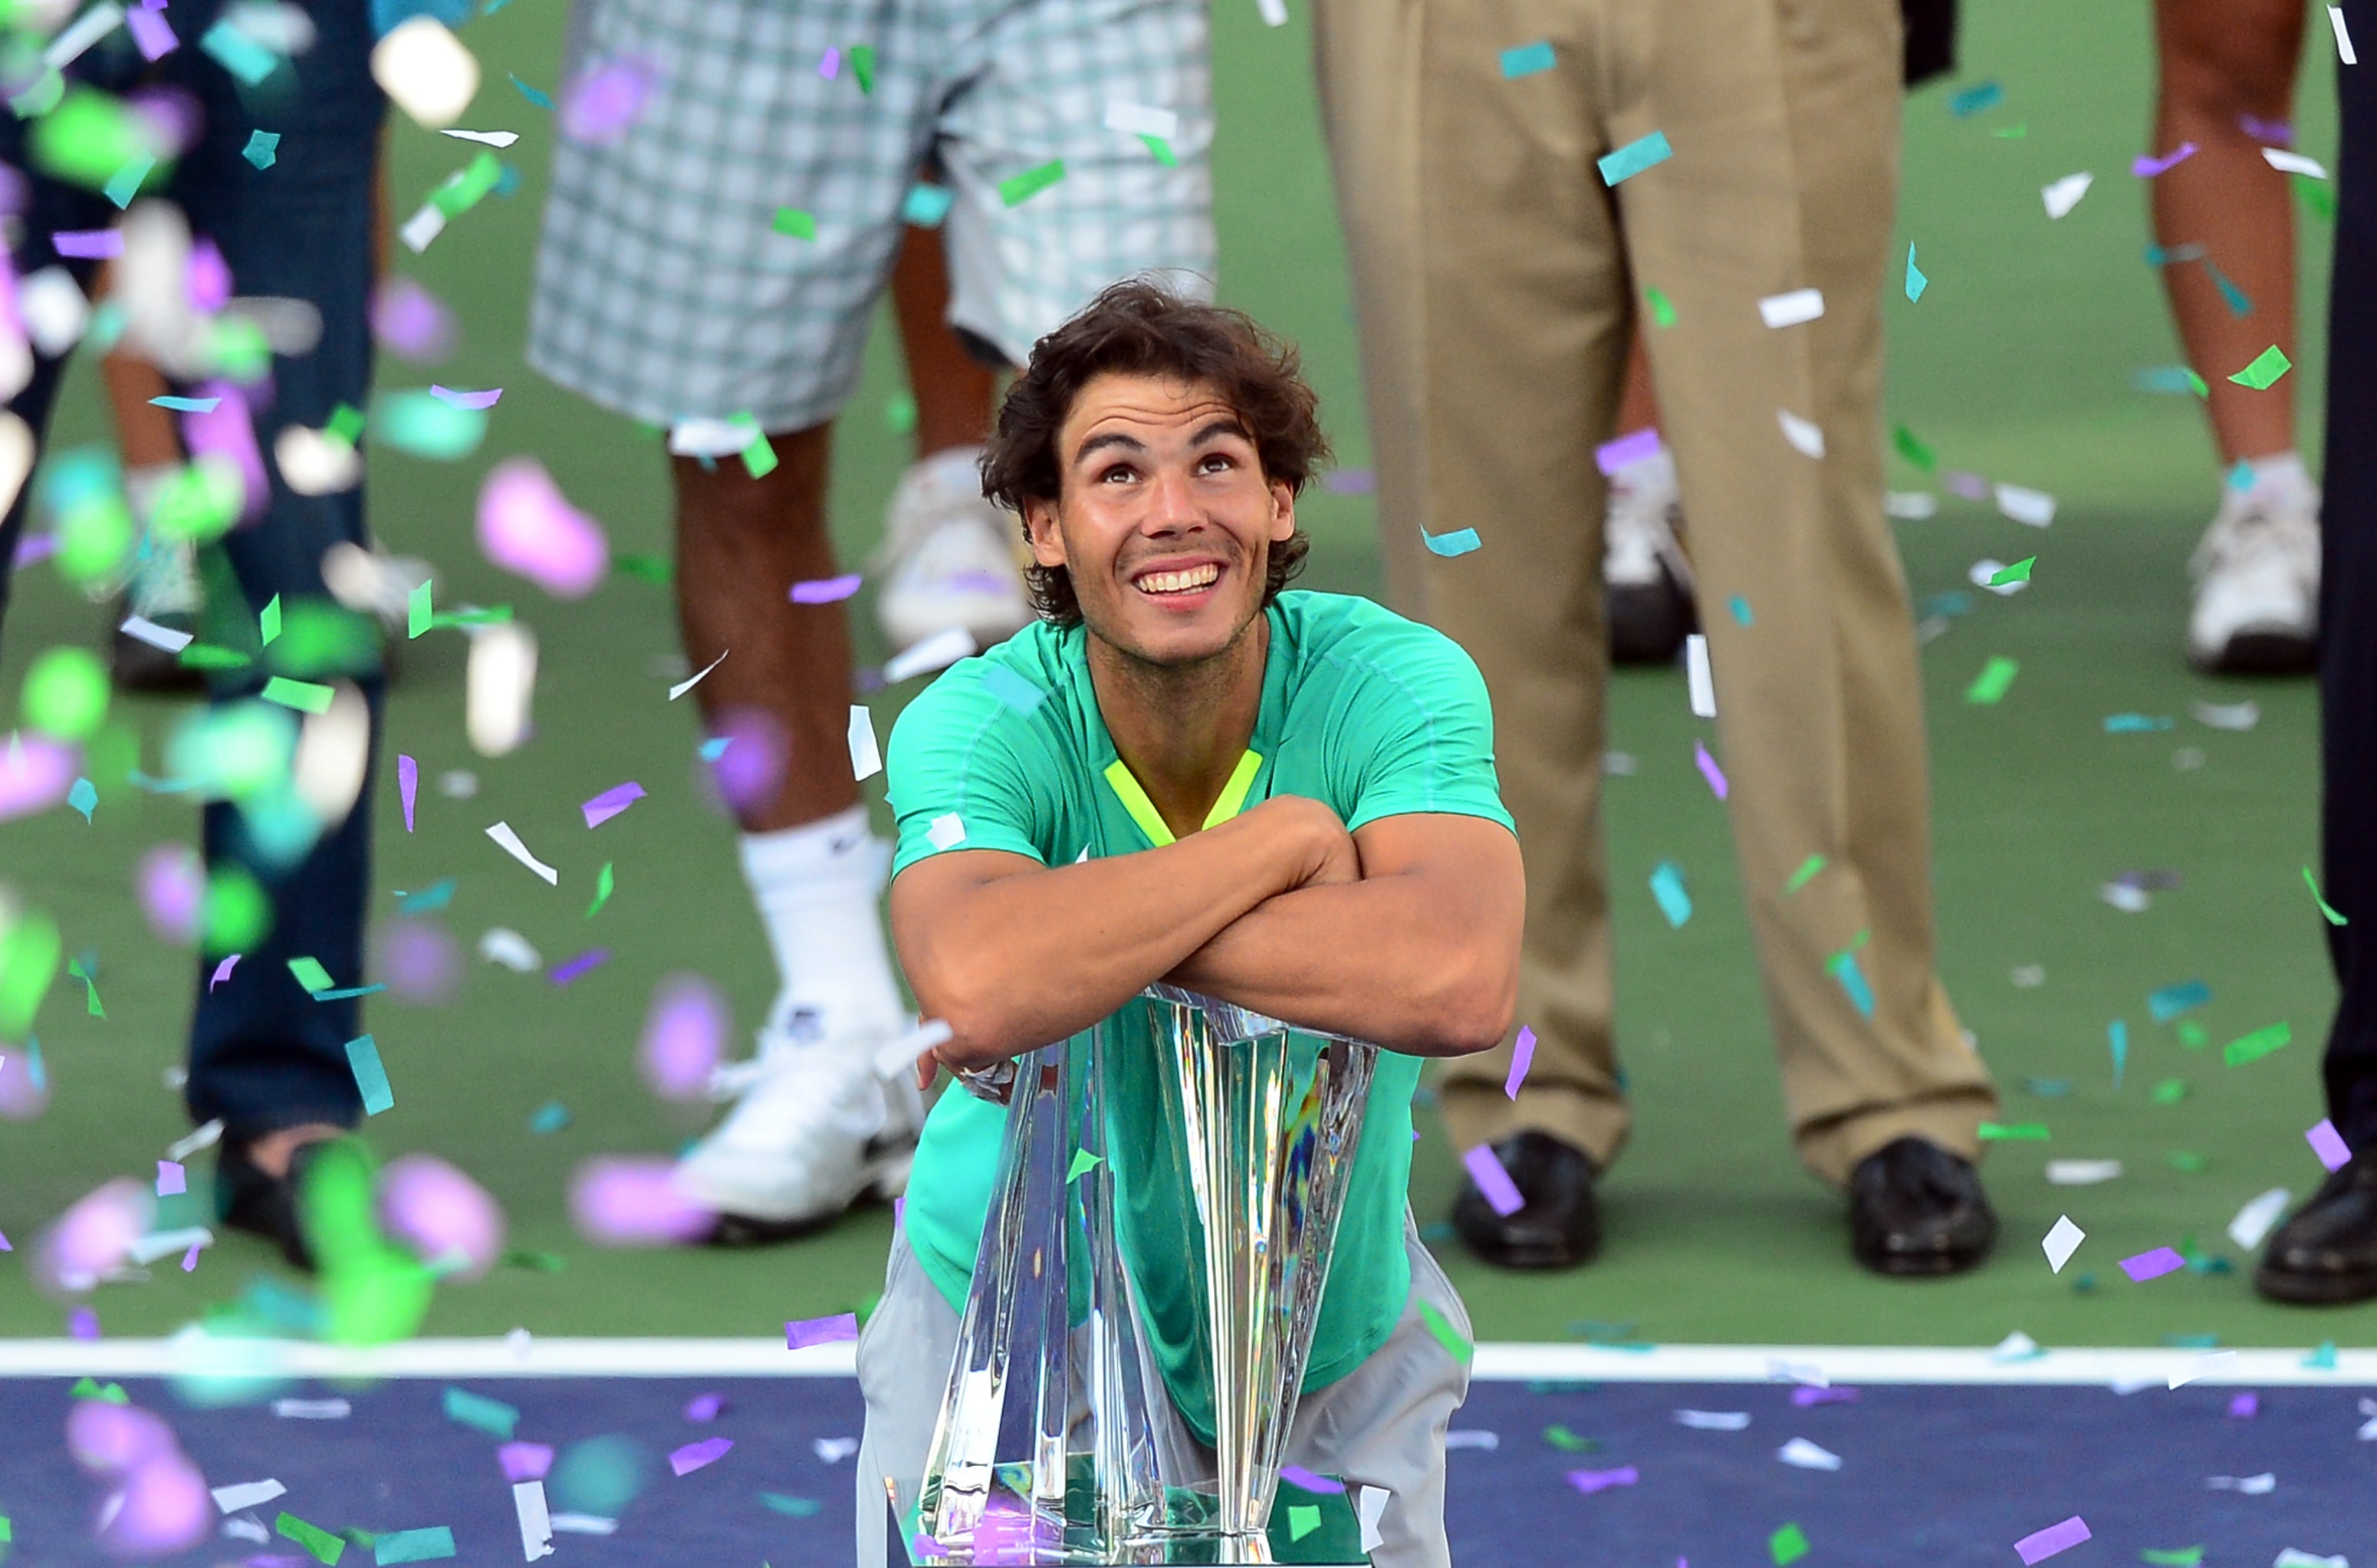 Rafael Nadal lowering own expectations in 'unexplored terrain